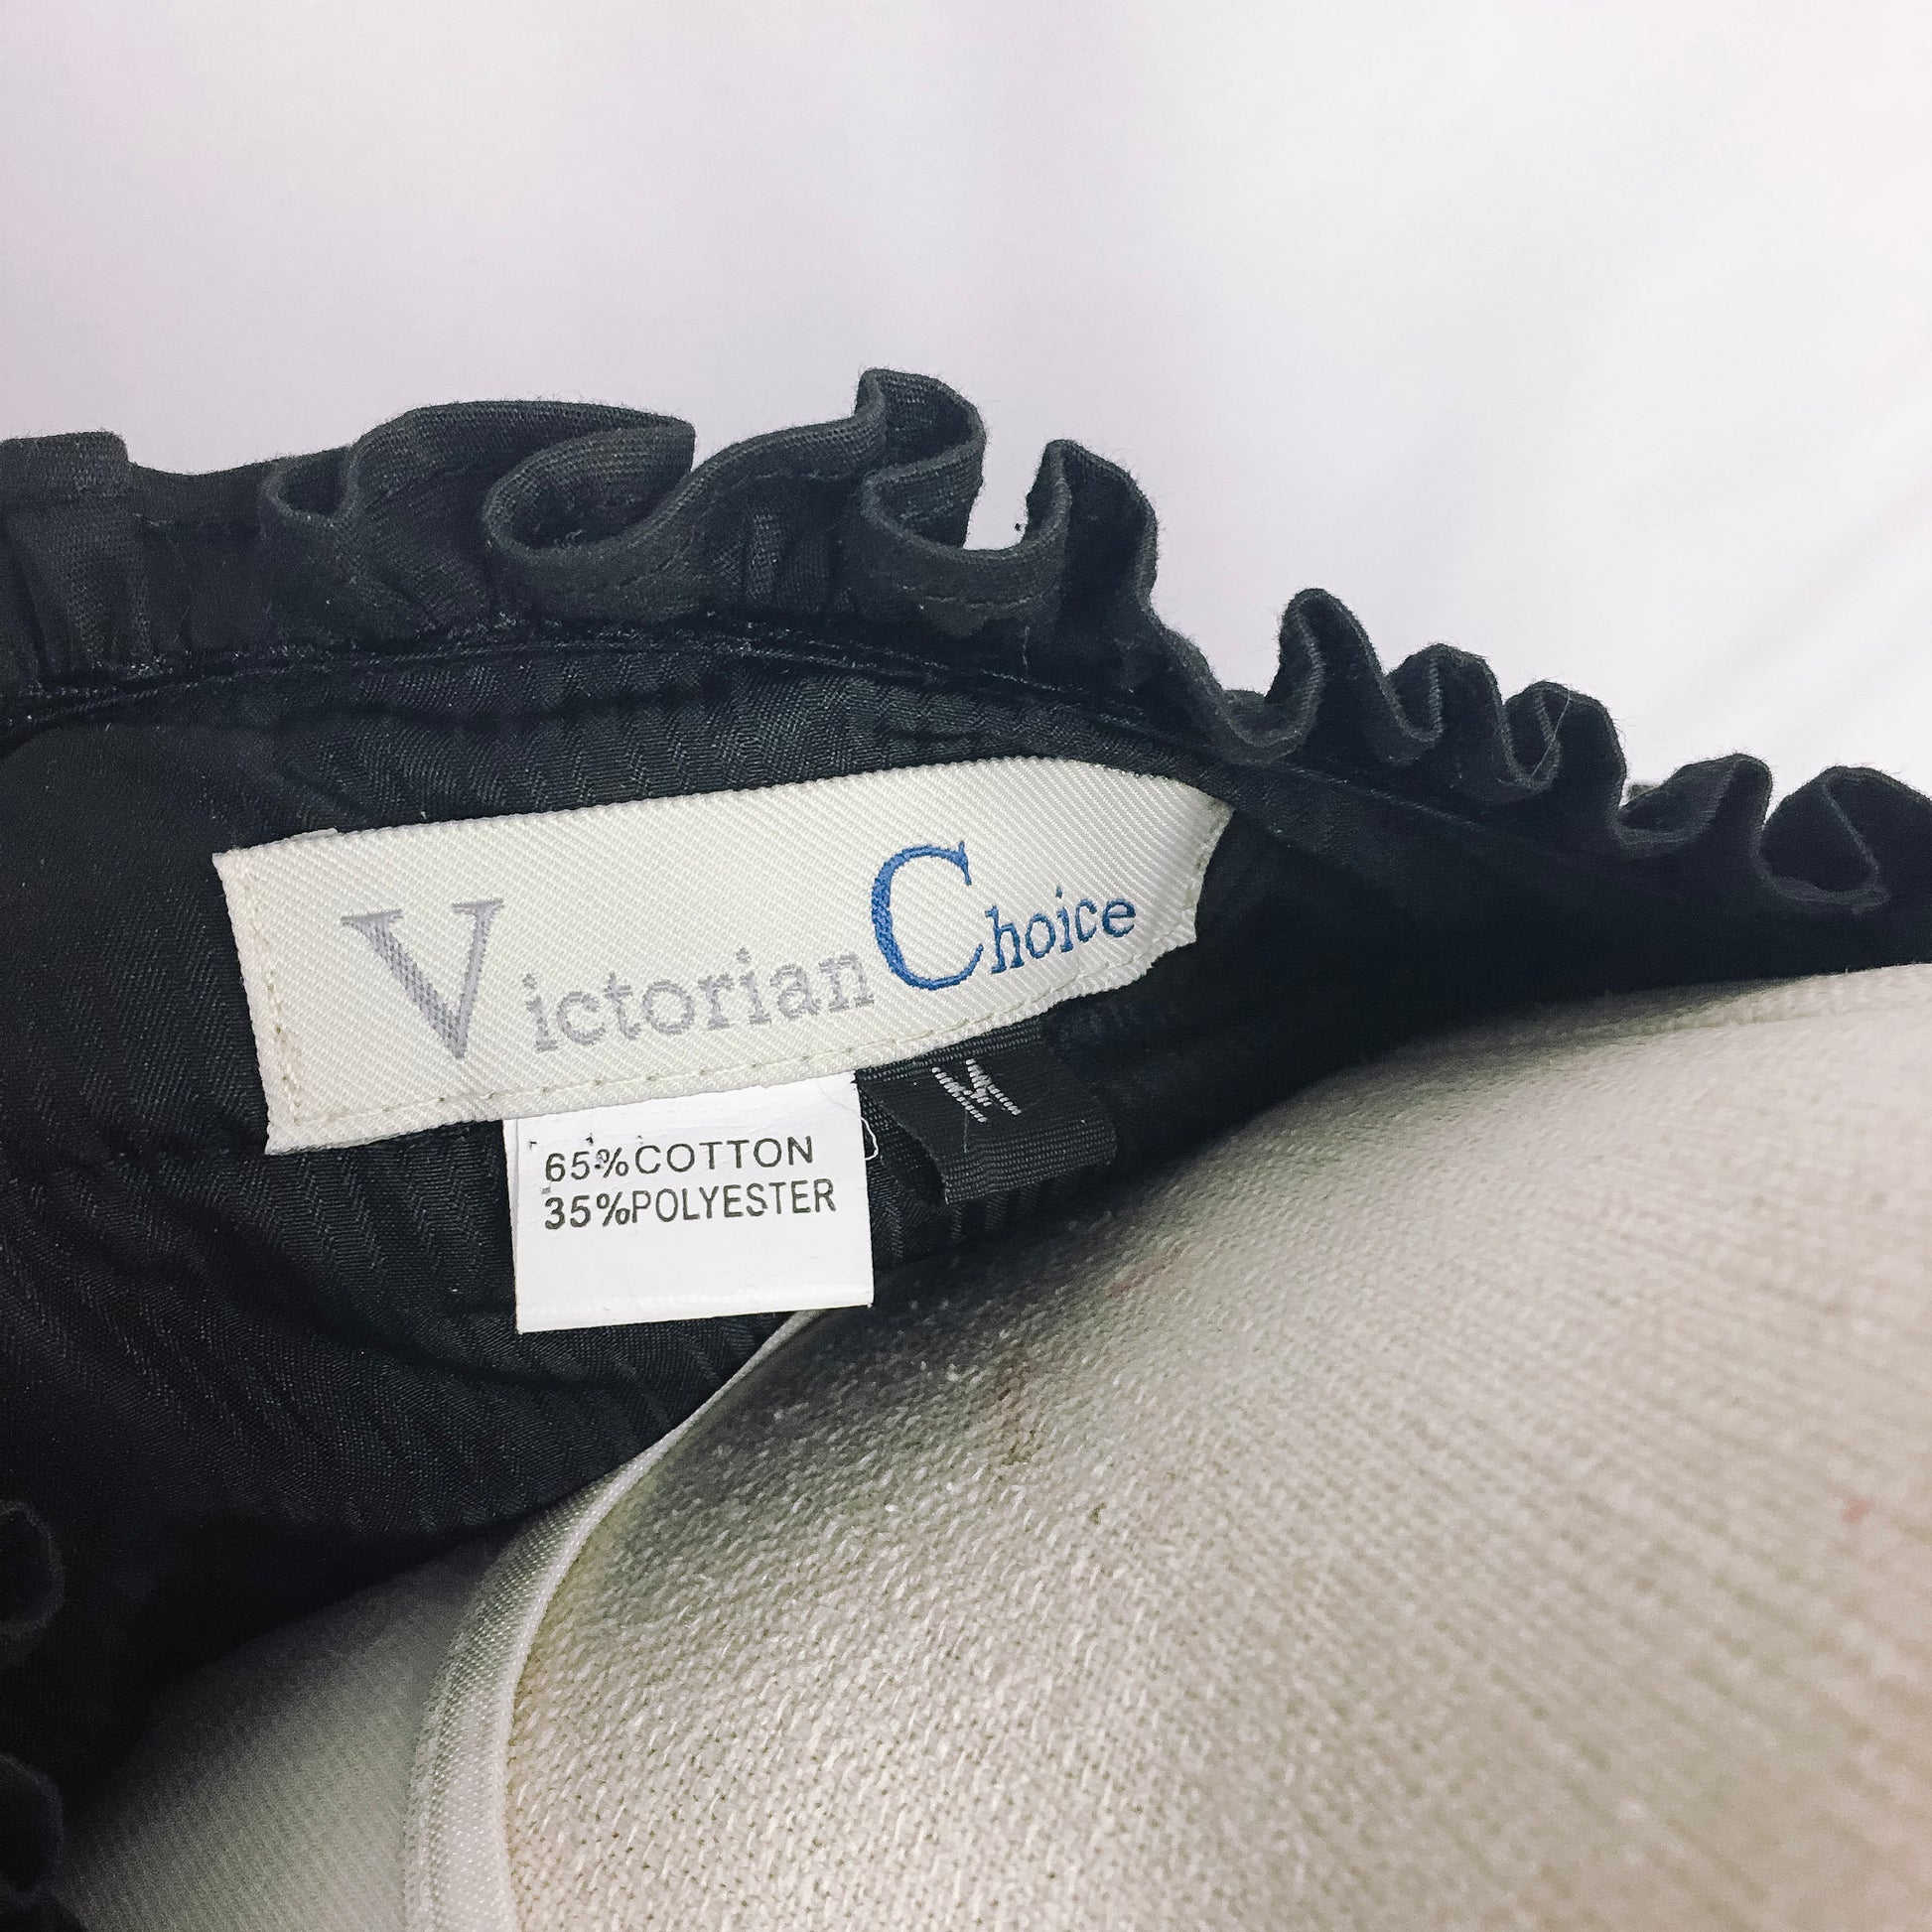 Vintage Victorian Choice Black Velvet with Bow Detail Blouse, Victorian Style, Sz. M